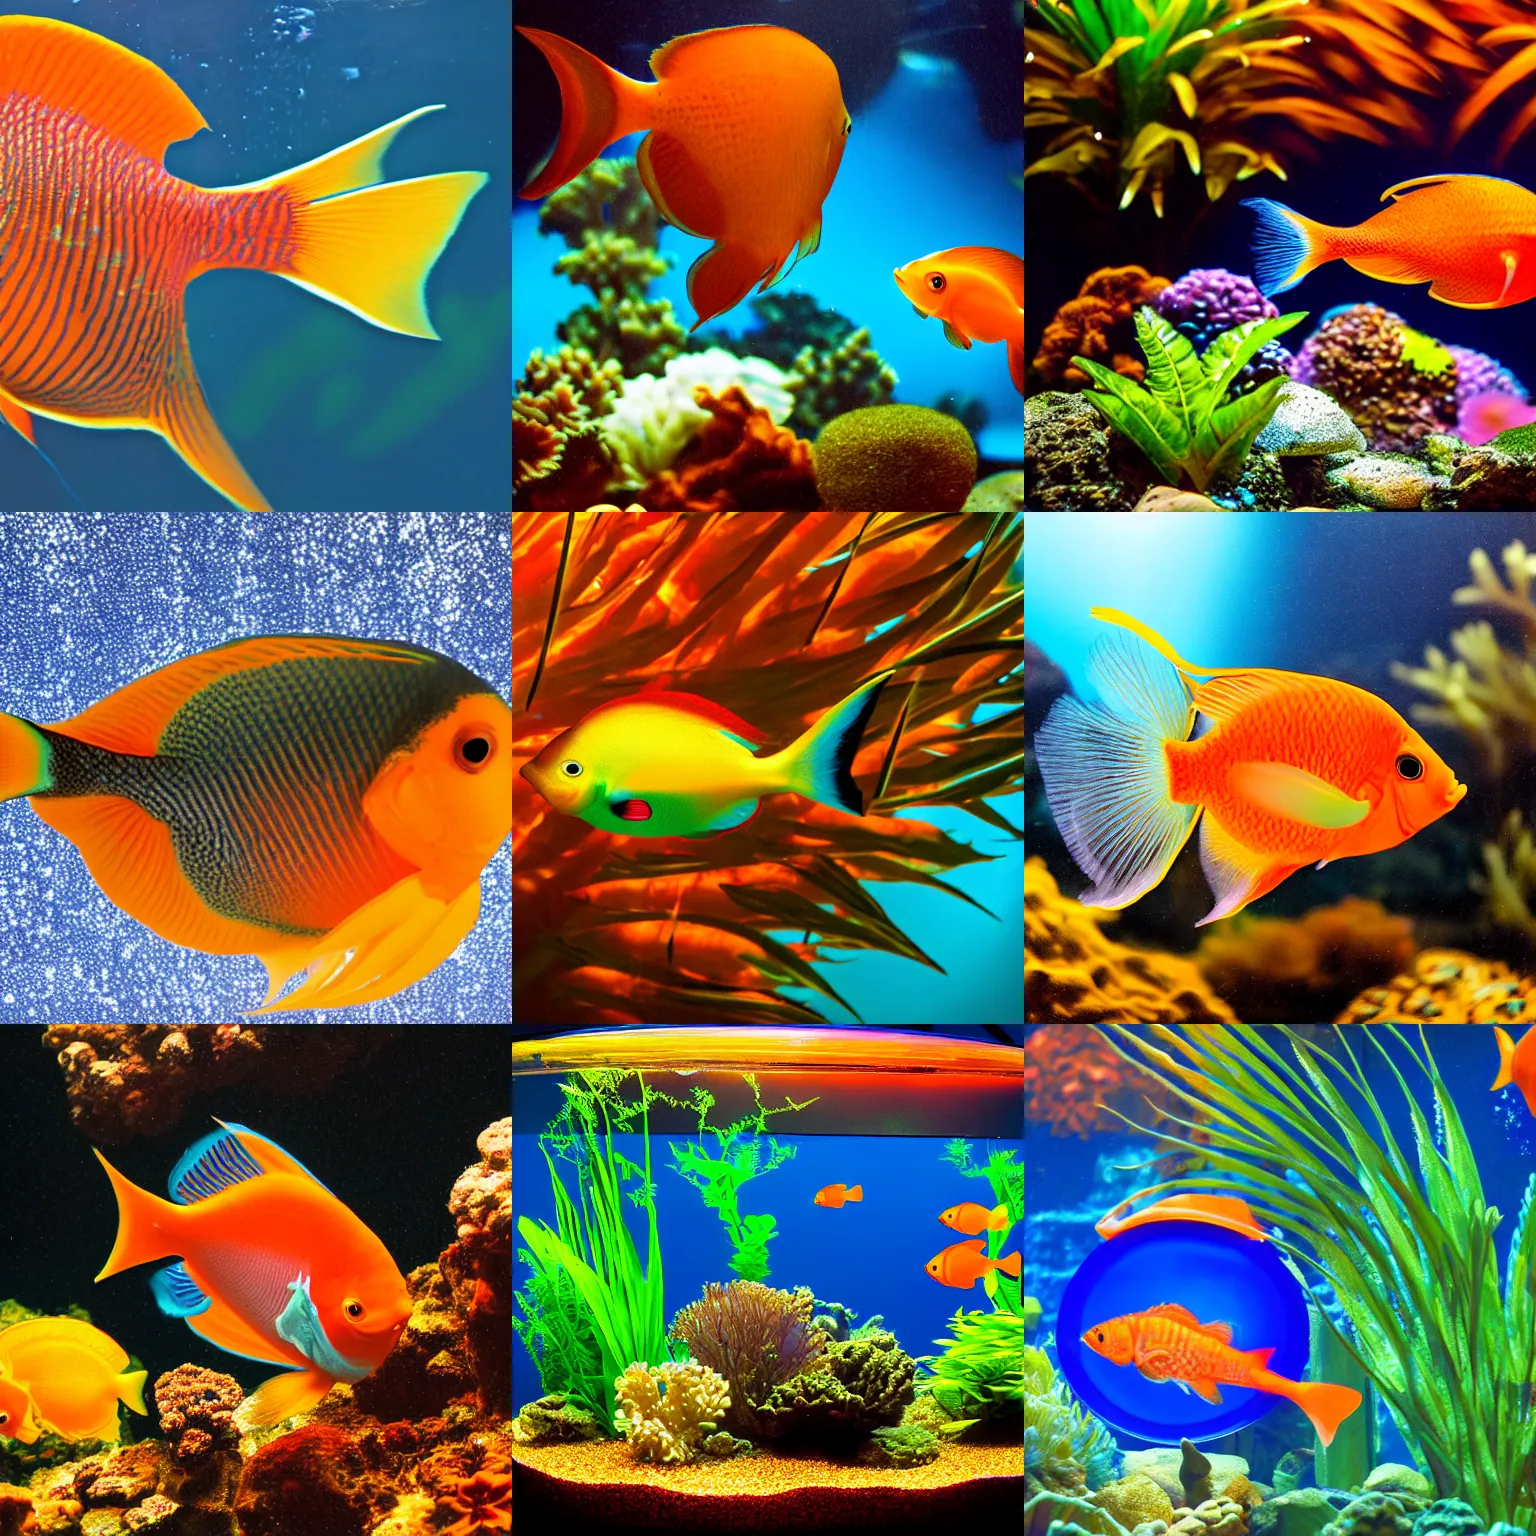 Prompt: Tropical fish with orange glow, in a round aquarium, dark blue background